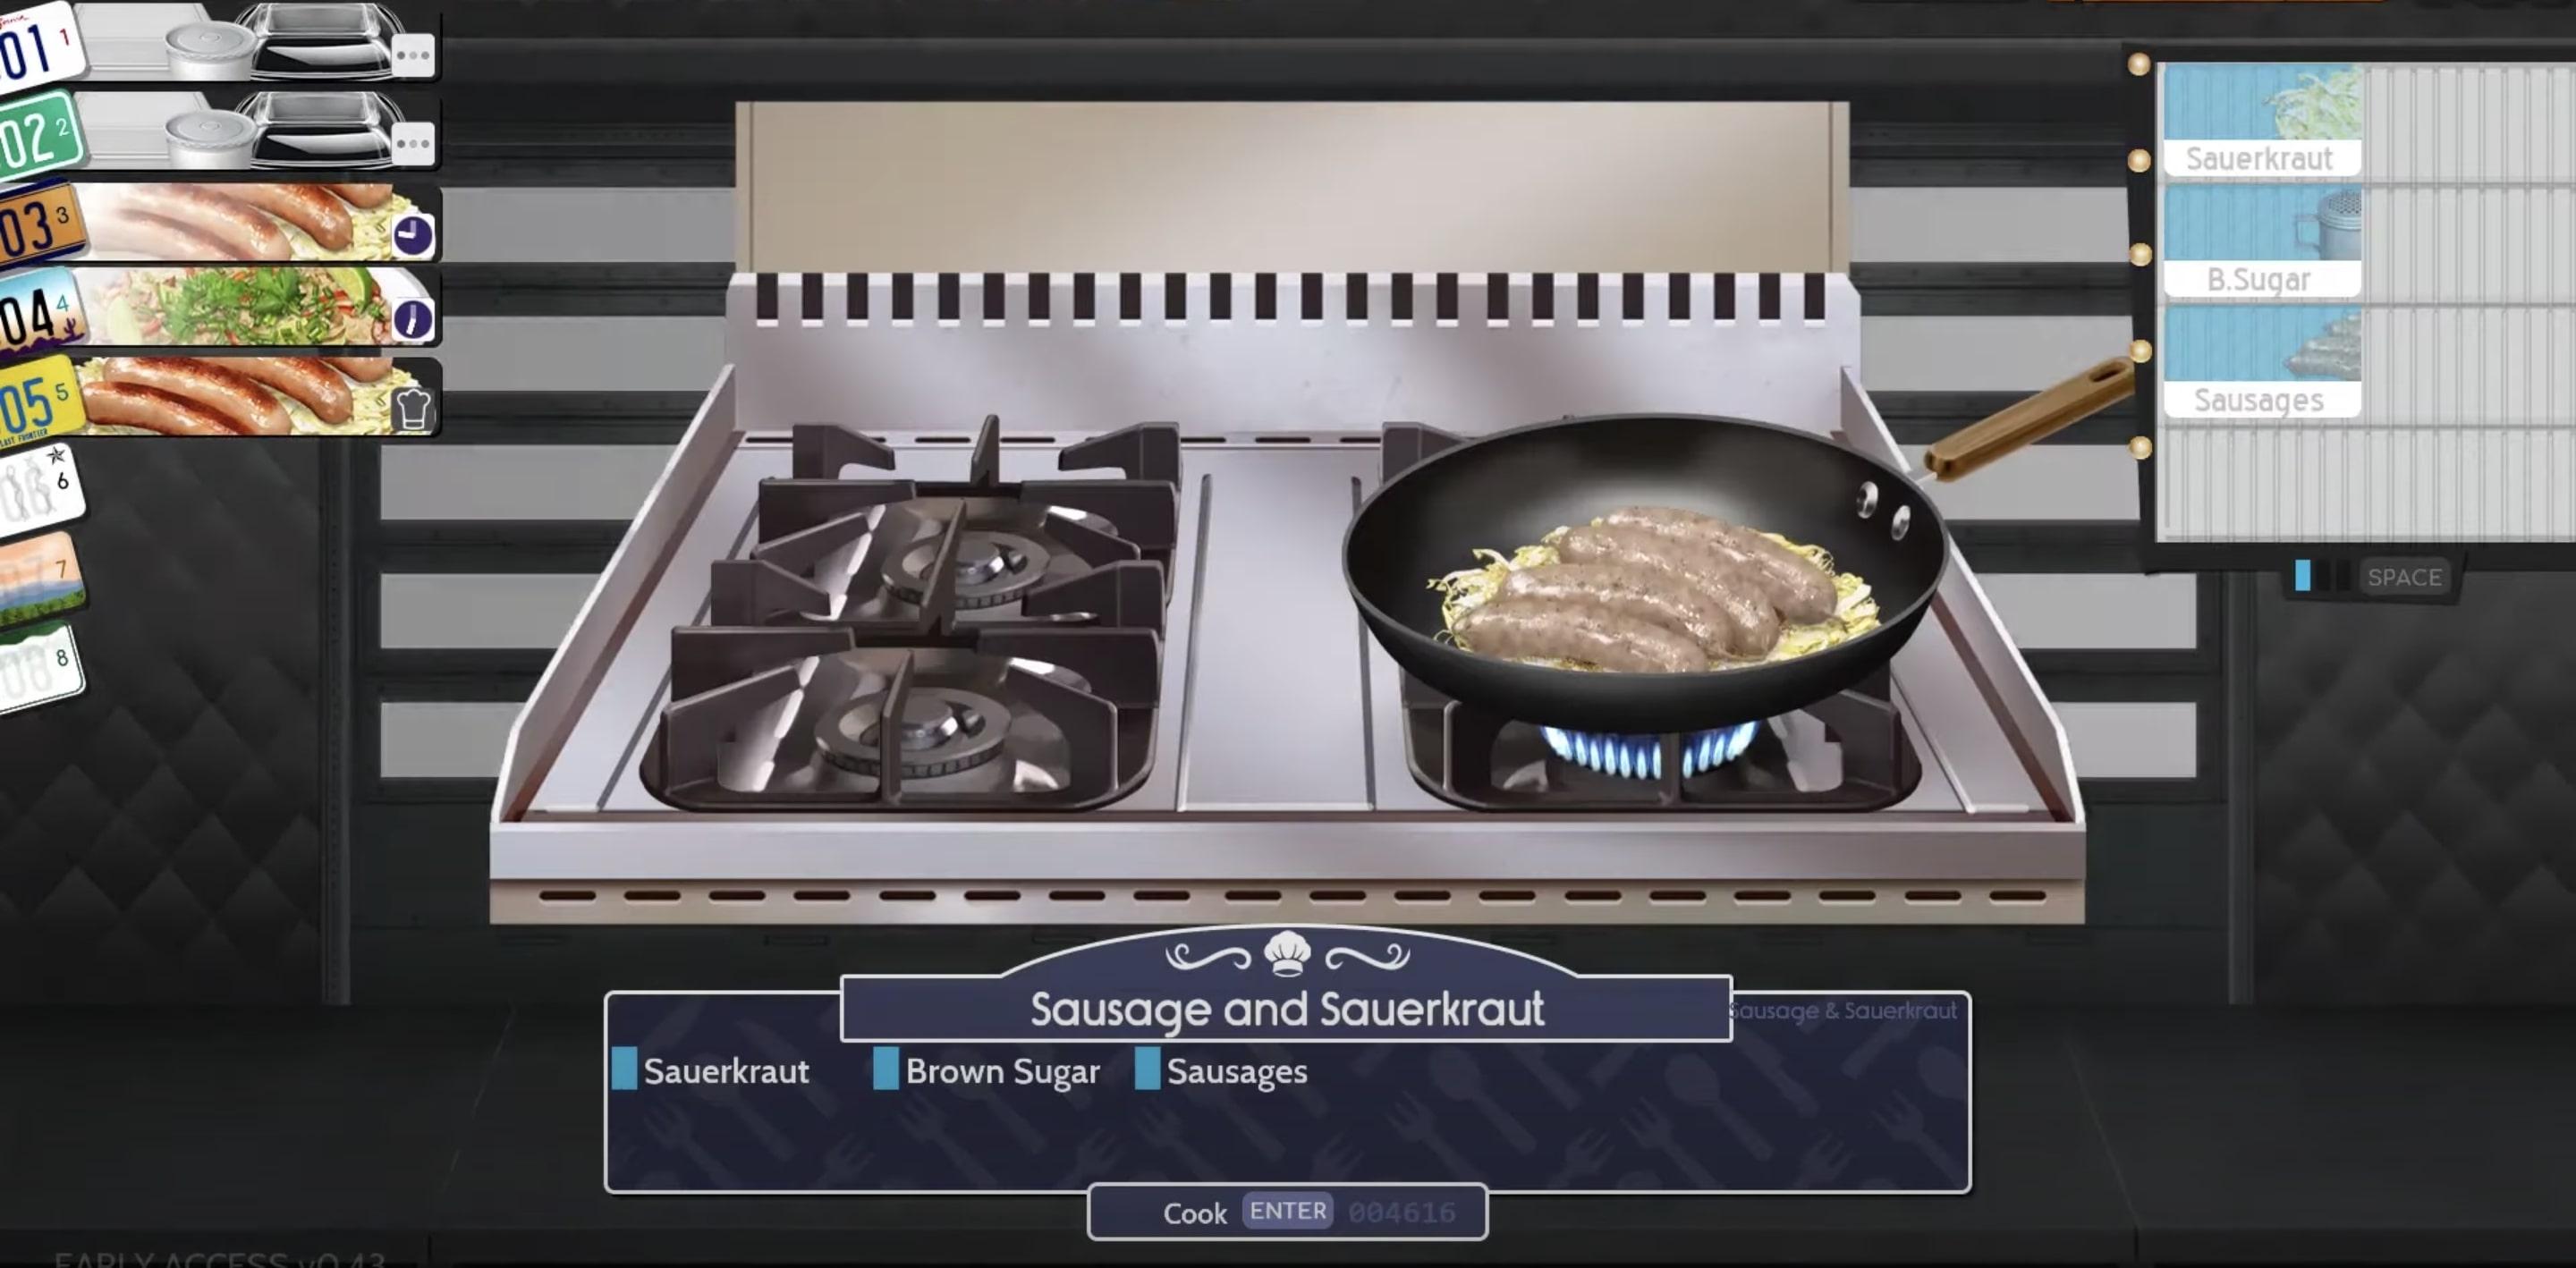 Chef vs. Gamer in Cooking Simulator VR